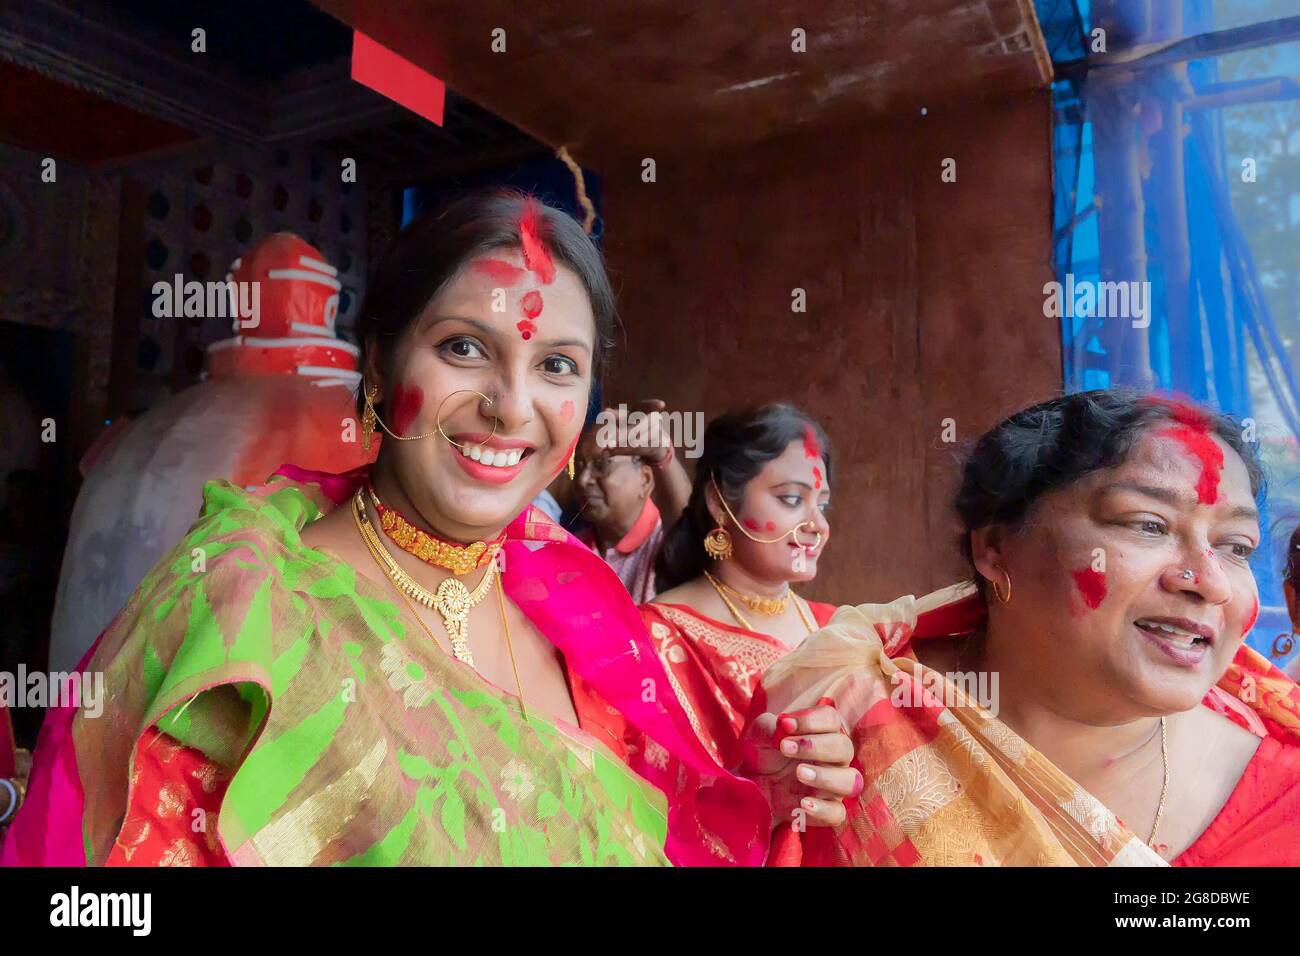 kolkatawest bengalindia 9th october 2019 joyful bengali married women in sindoor or sindur khela traditional ritual of applying vermilion to fa 2G8DBWE